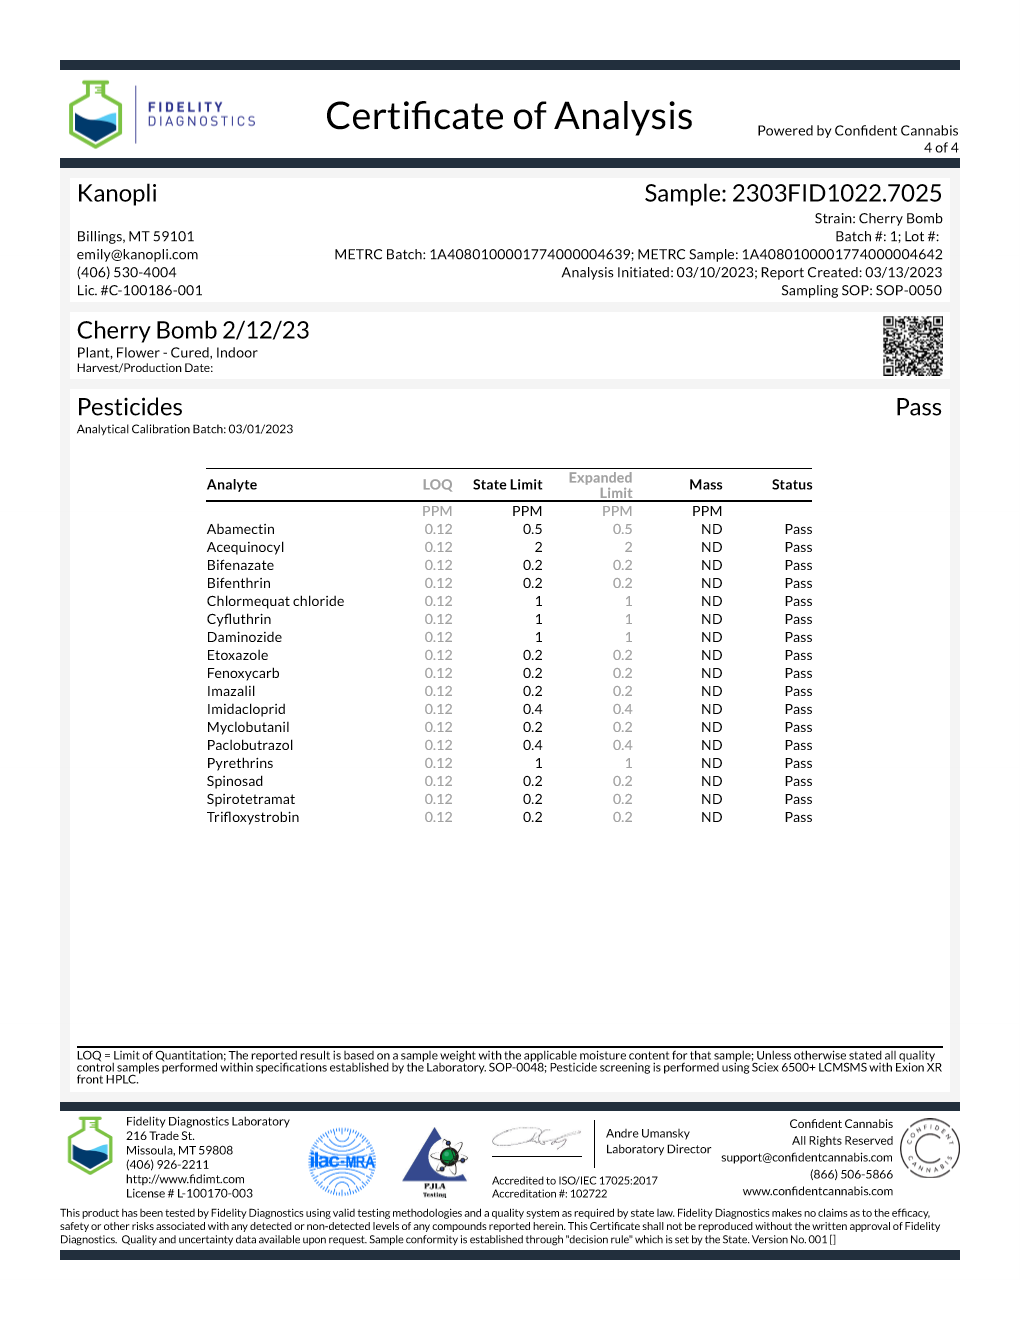 Cherry Bomb - Hybrid 28.56% THC (Feb. 2023) MEDICAL